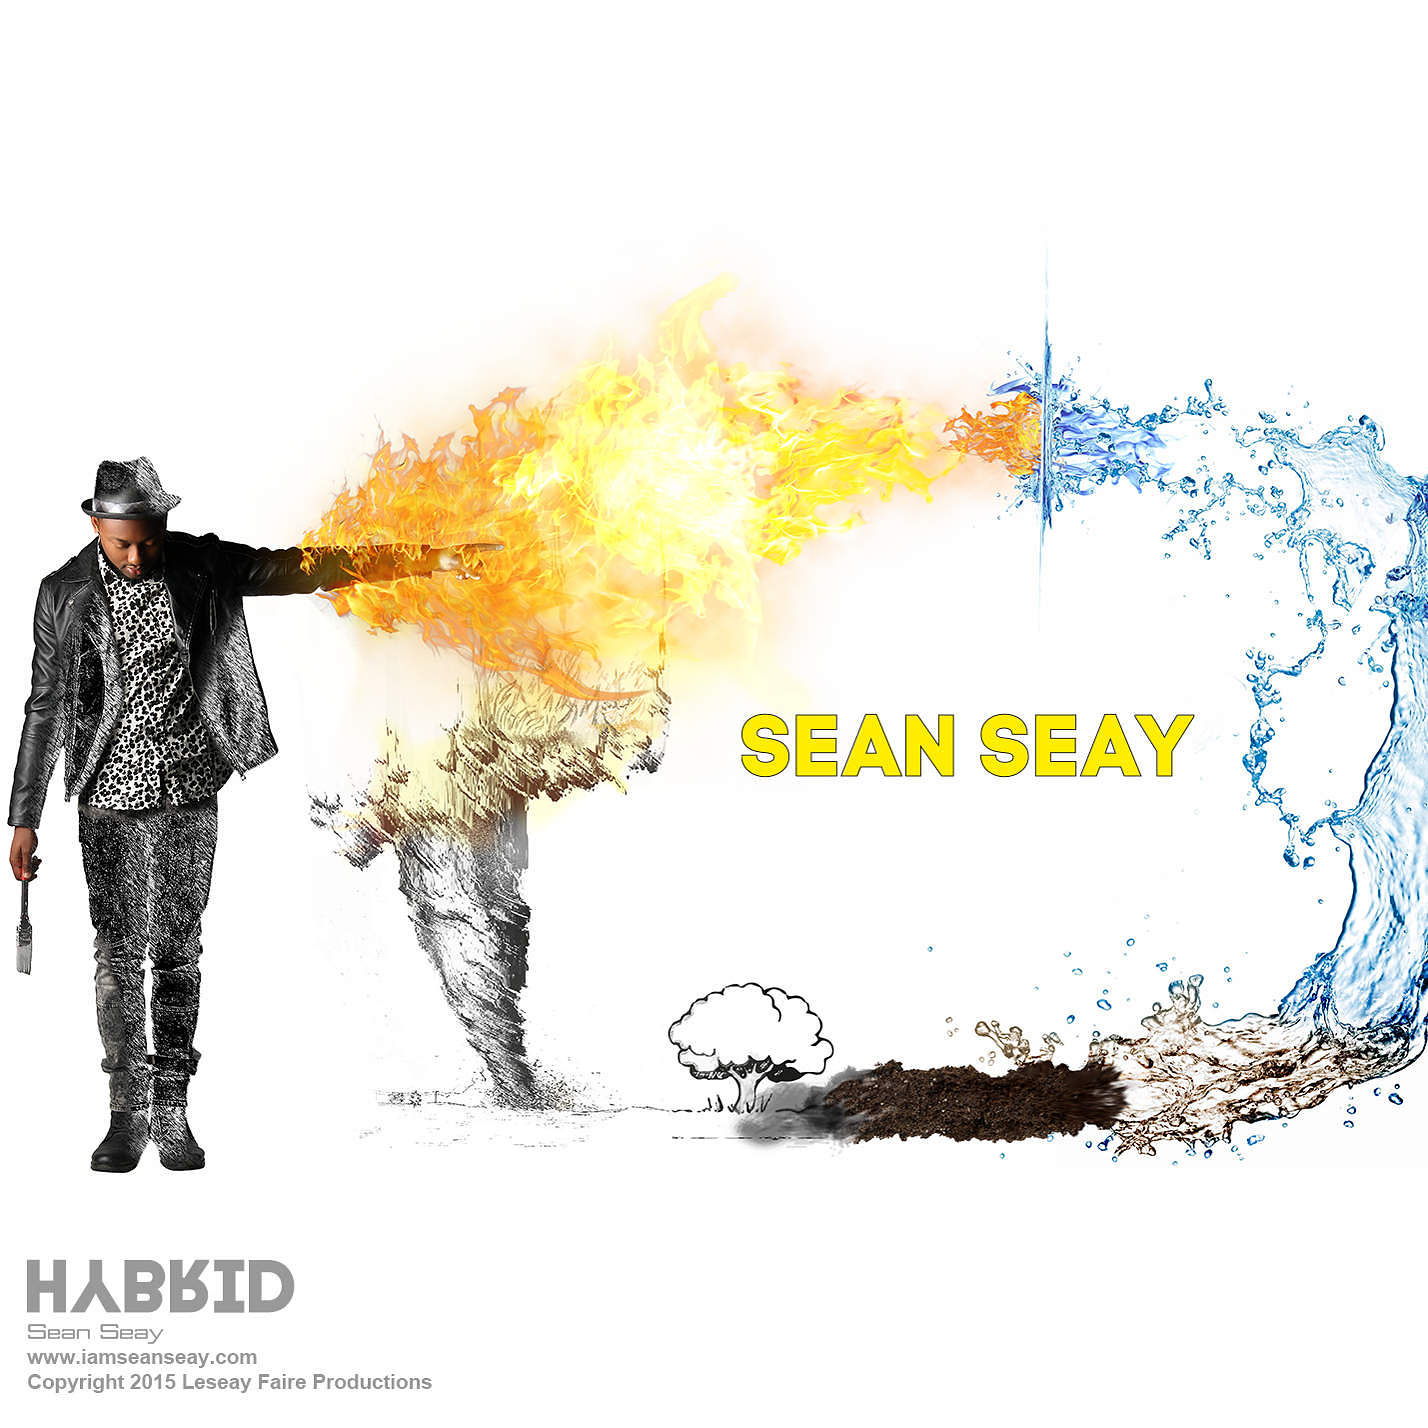 HYBRID cover art for Sean Seay